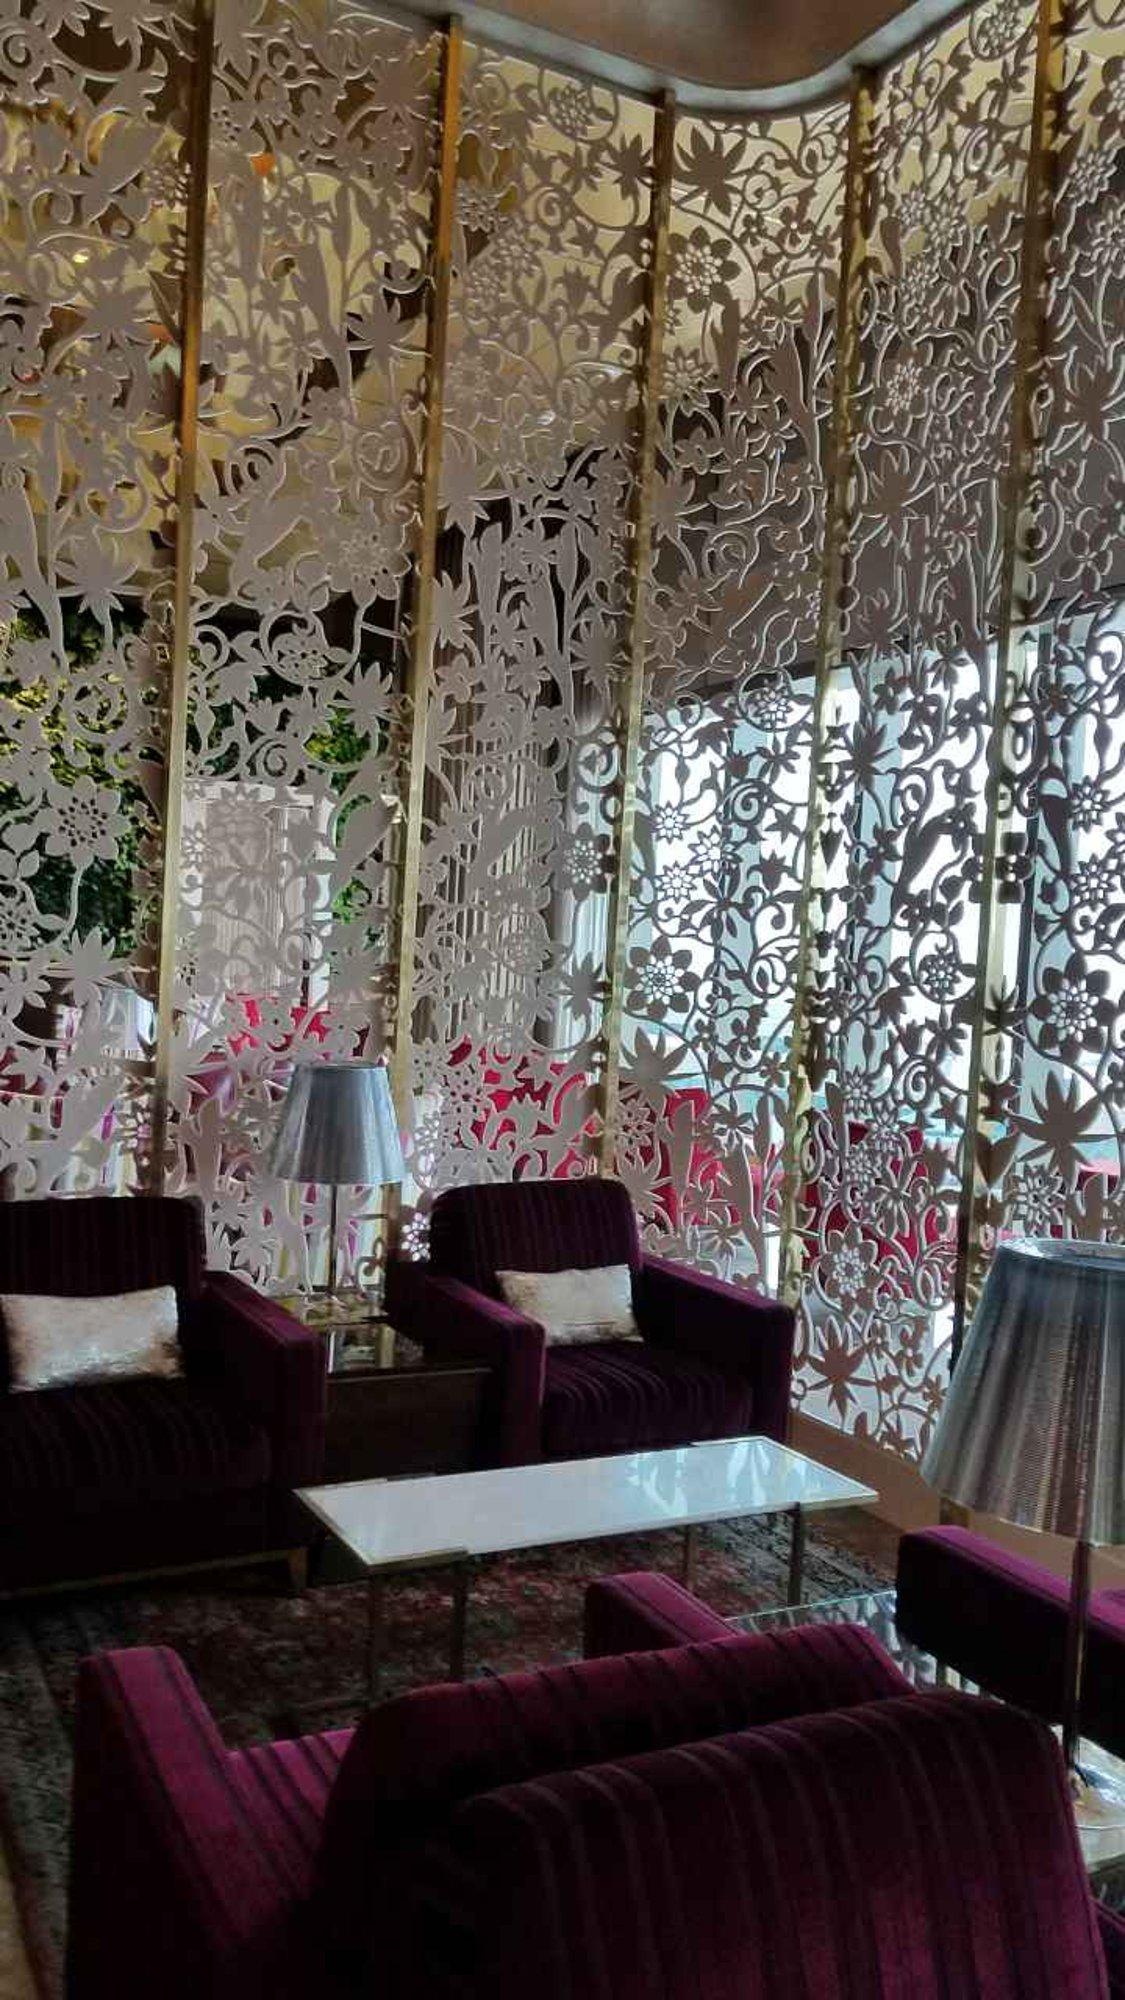 Adani Lounge (International West Wing) image 34 of 60